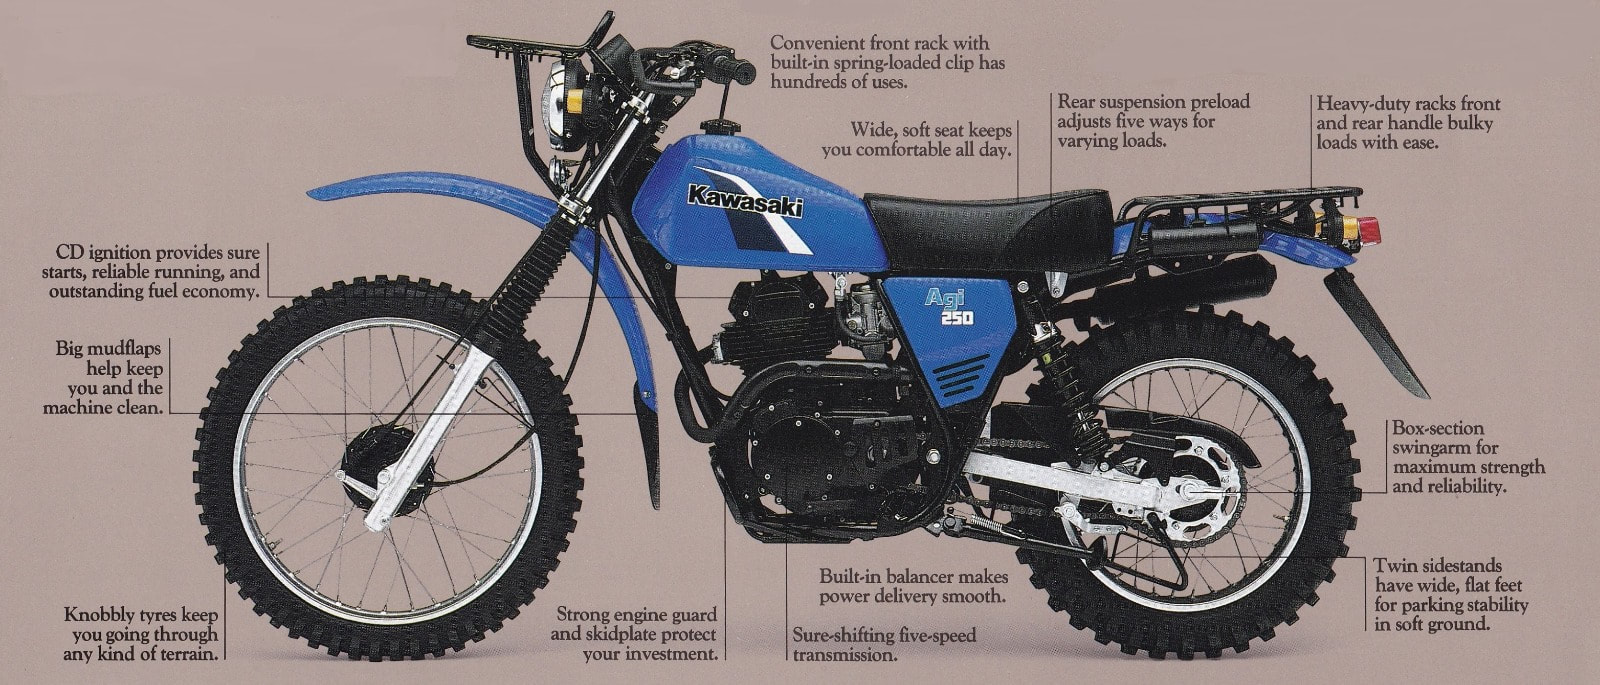 KV250 agri bike features